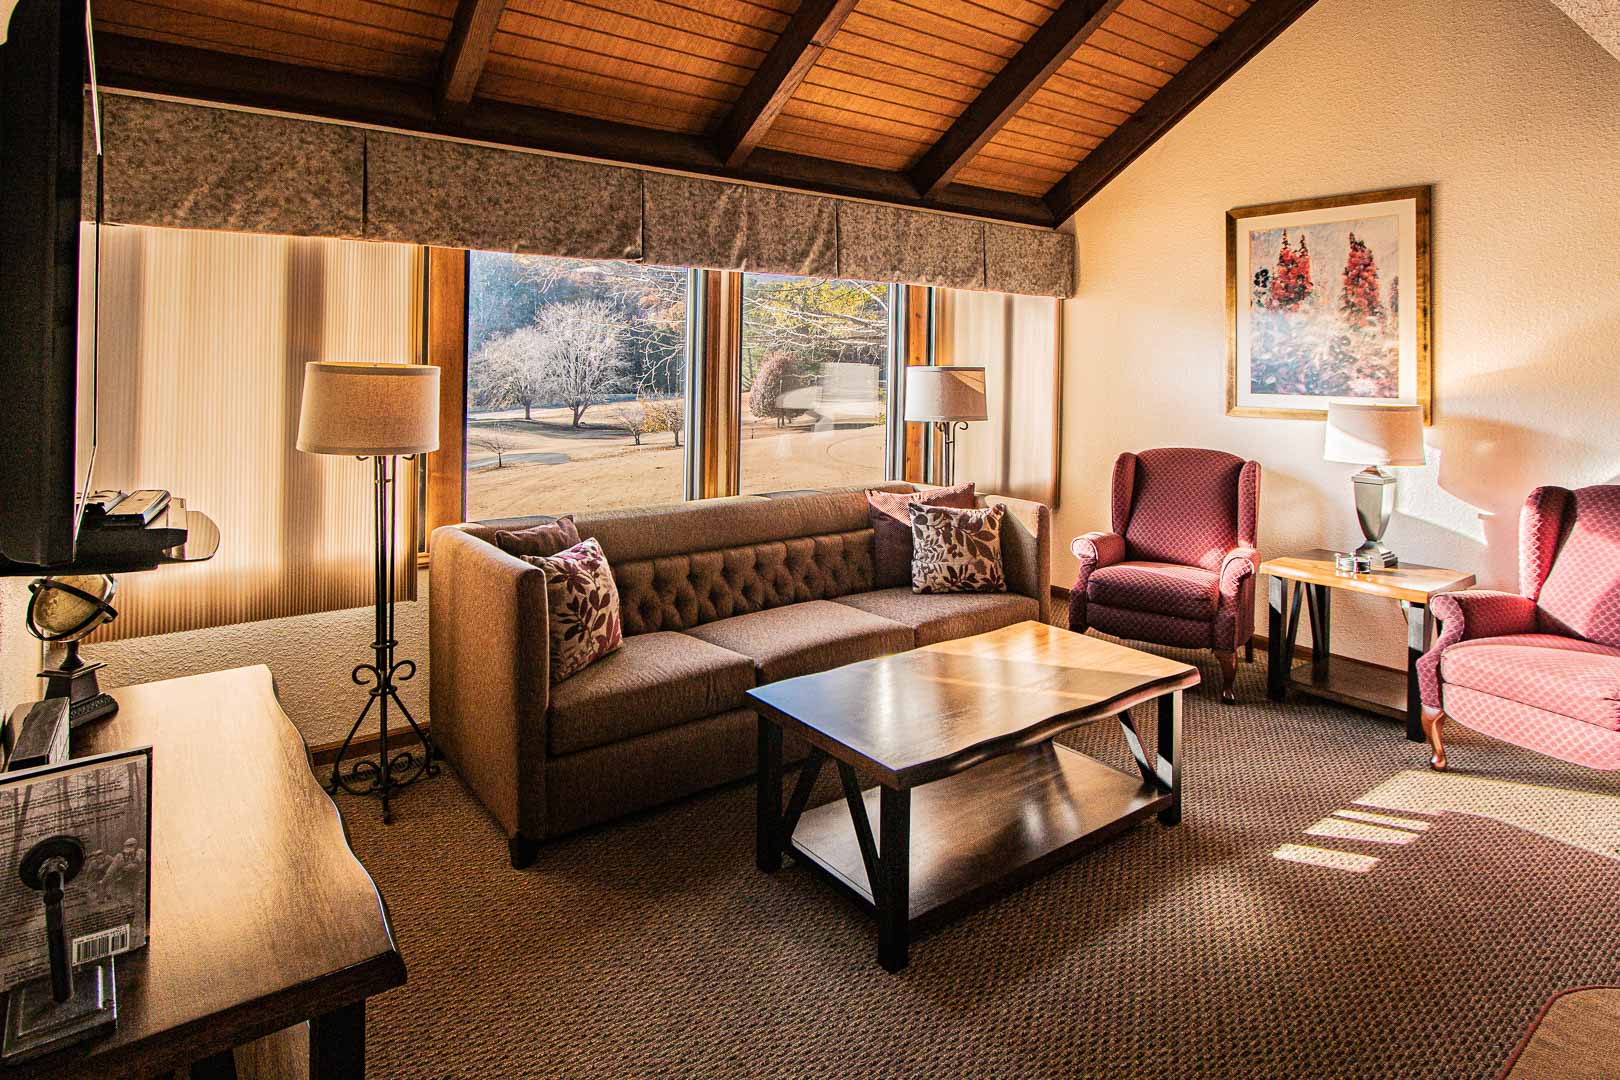 A cozy living room area at VRI's Mountain Loft Resort in North Carolina.